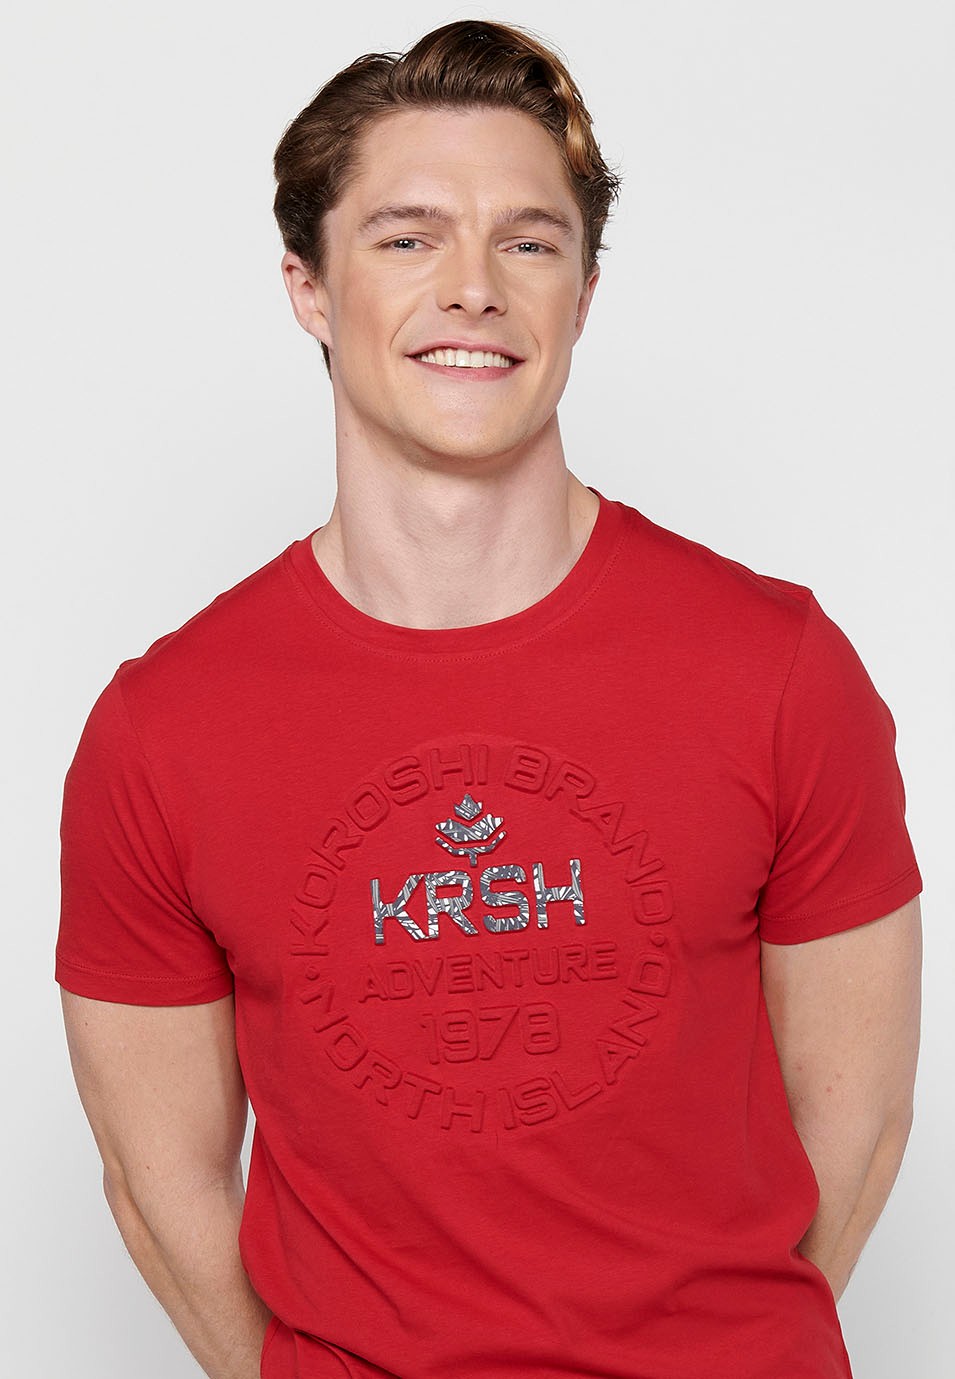 Men's Red Color Round Neck Cotton Short Sleeve T-shirt 5